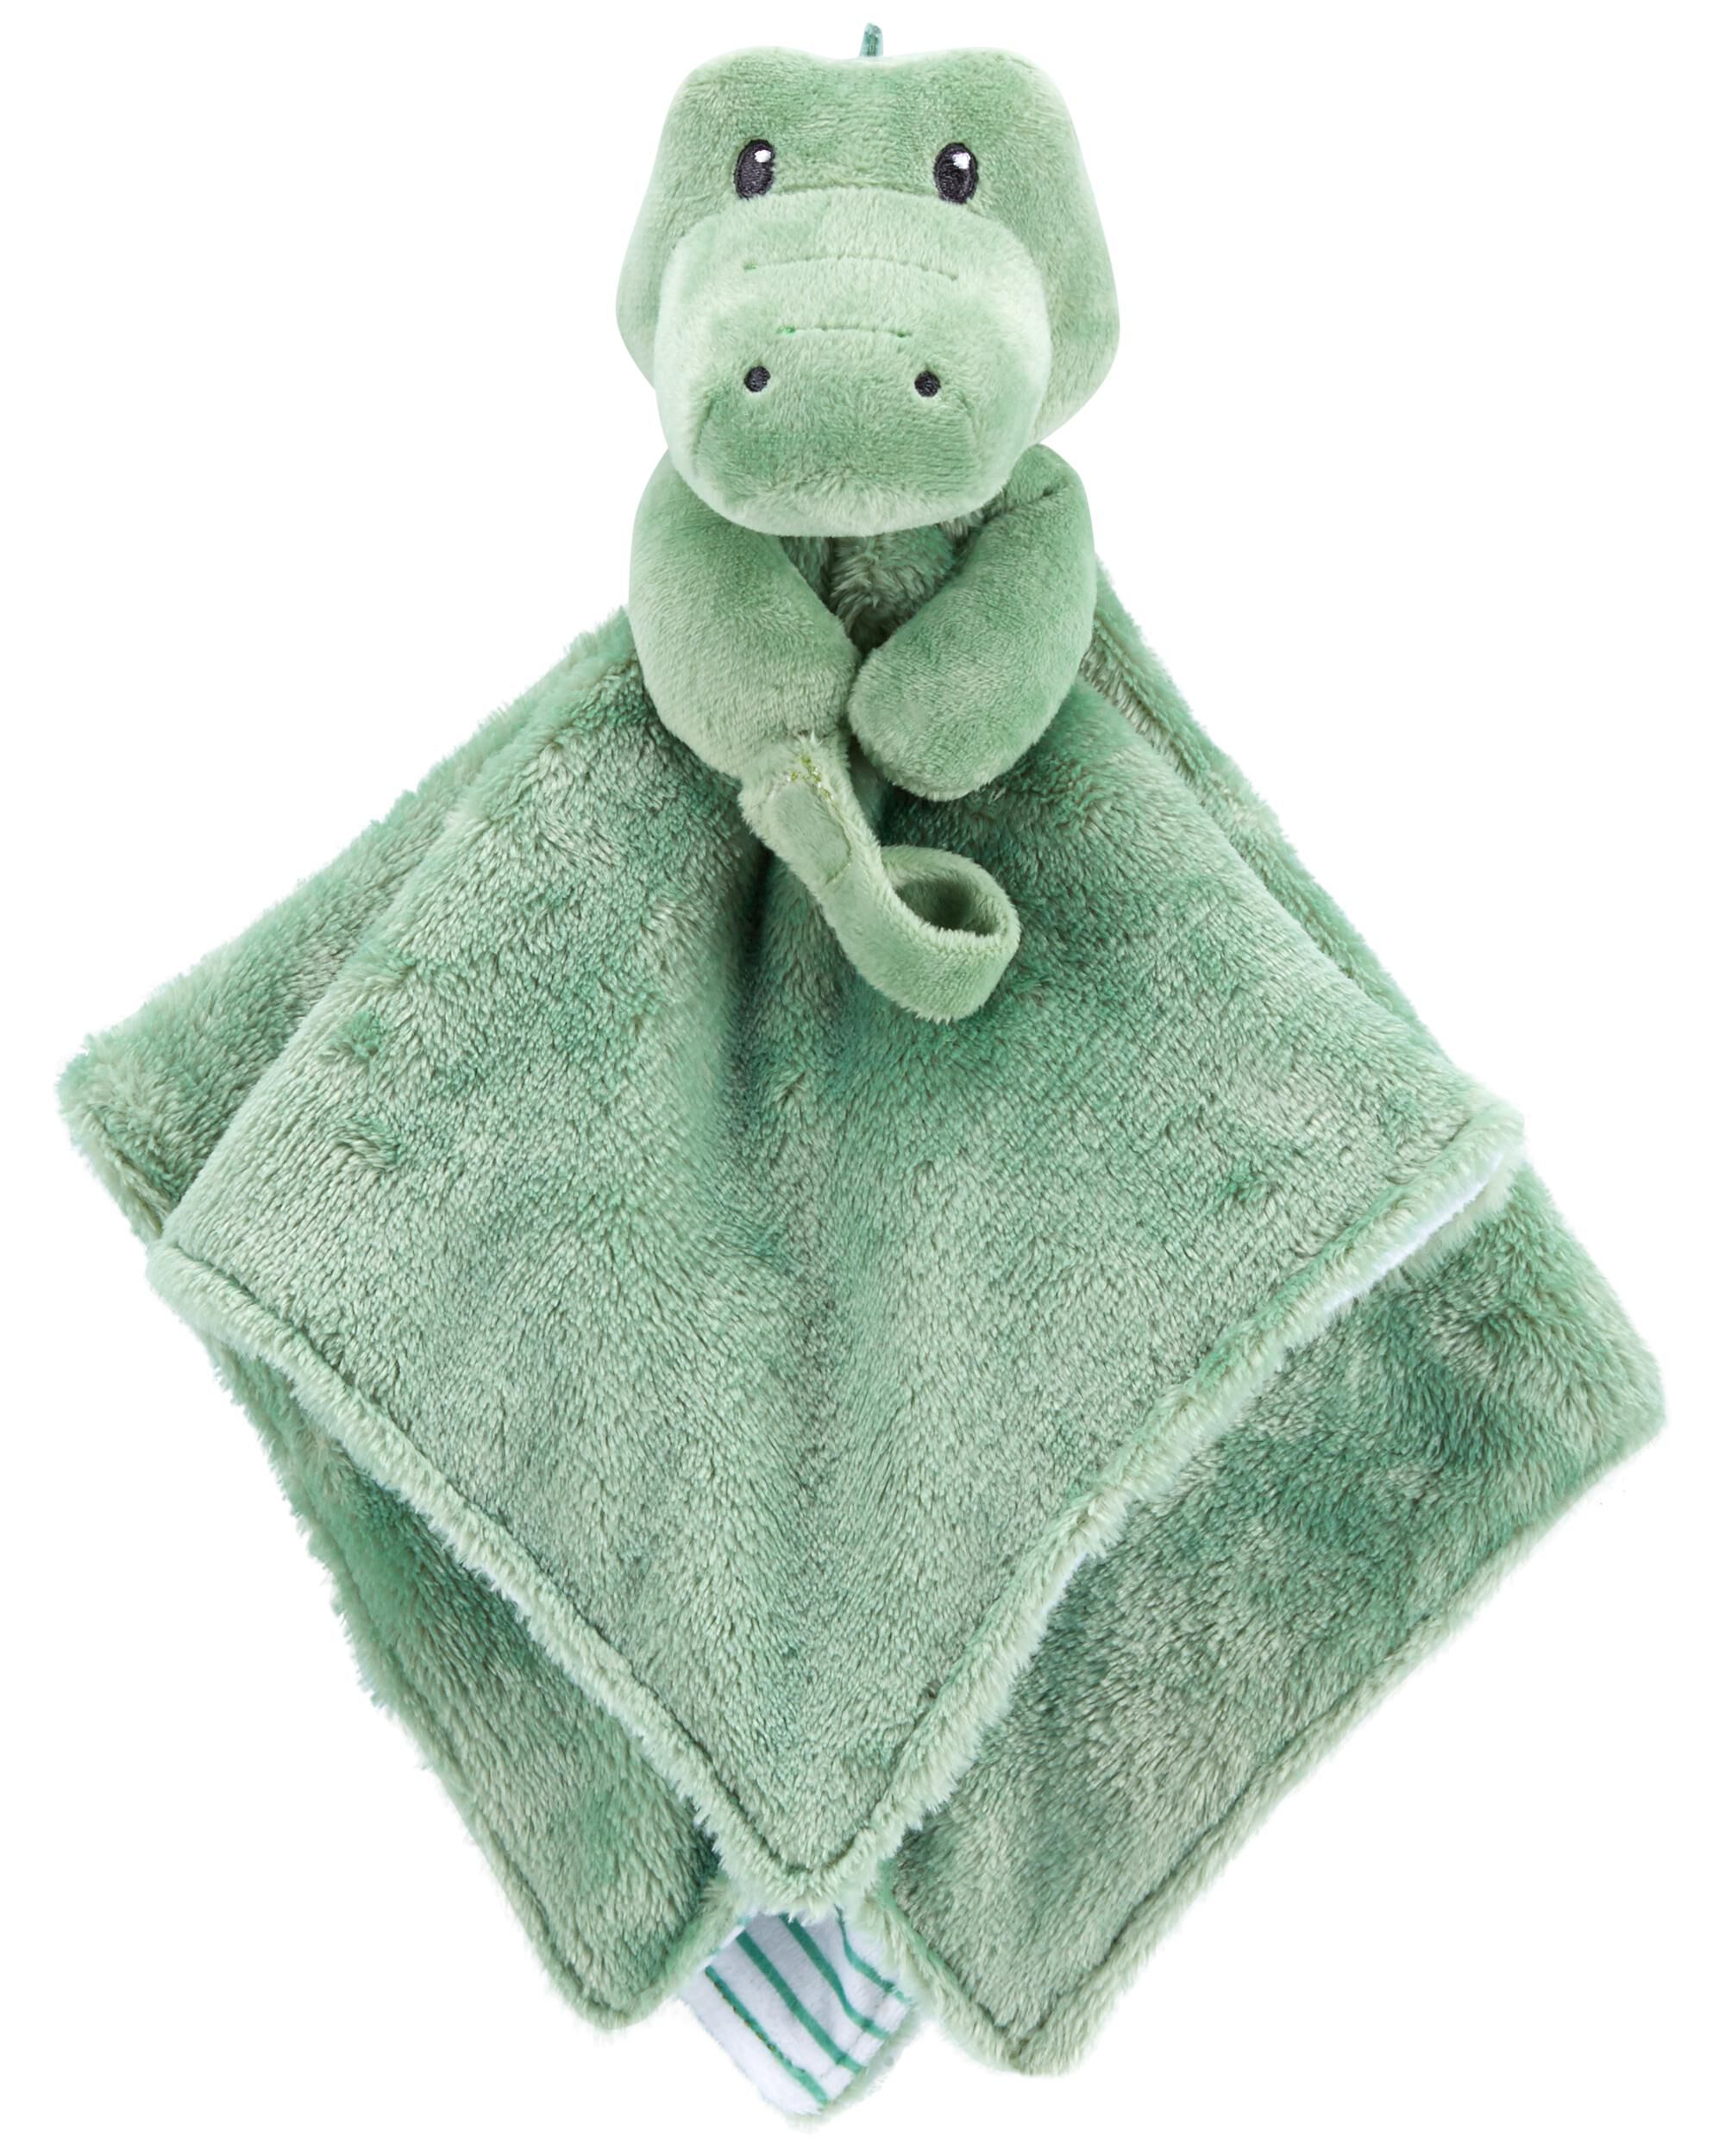 Baby Alligator Security Blanket